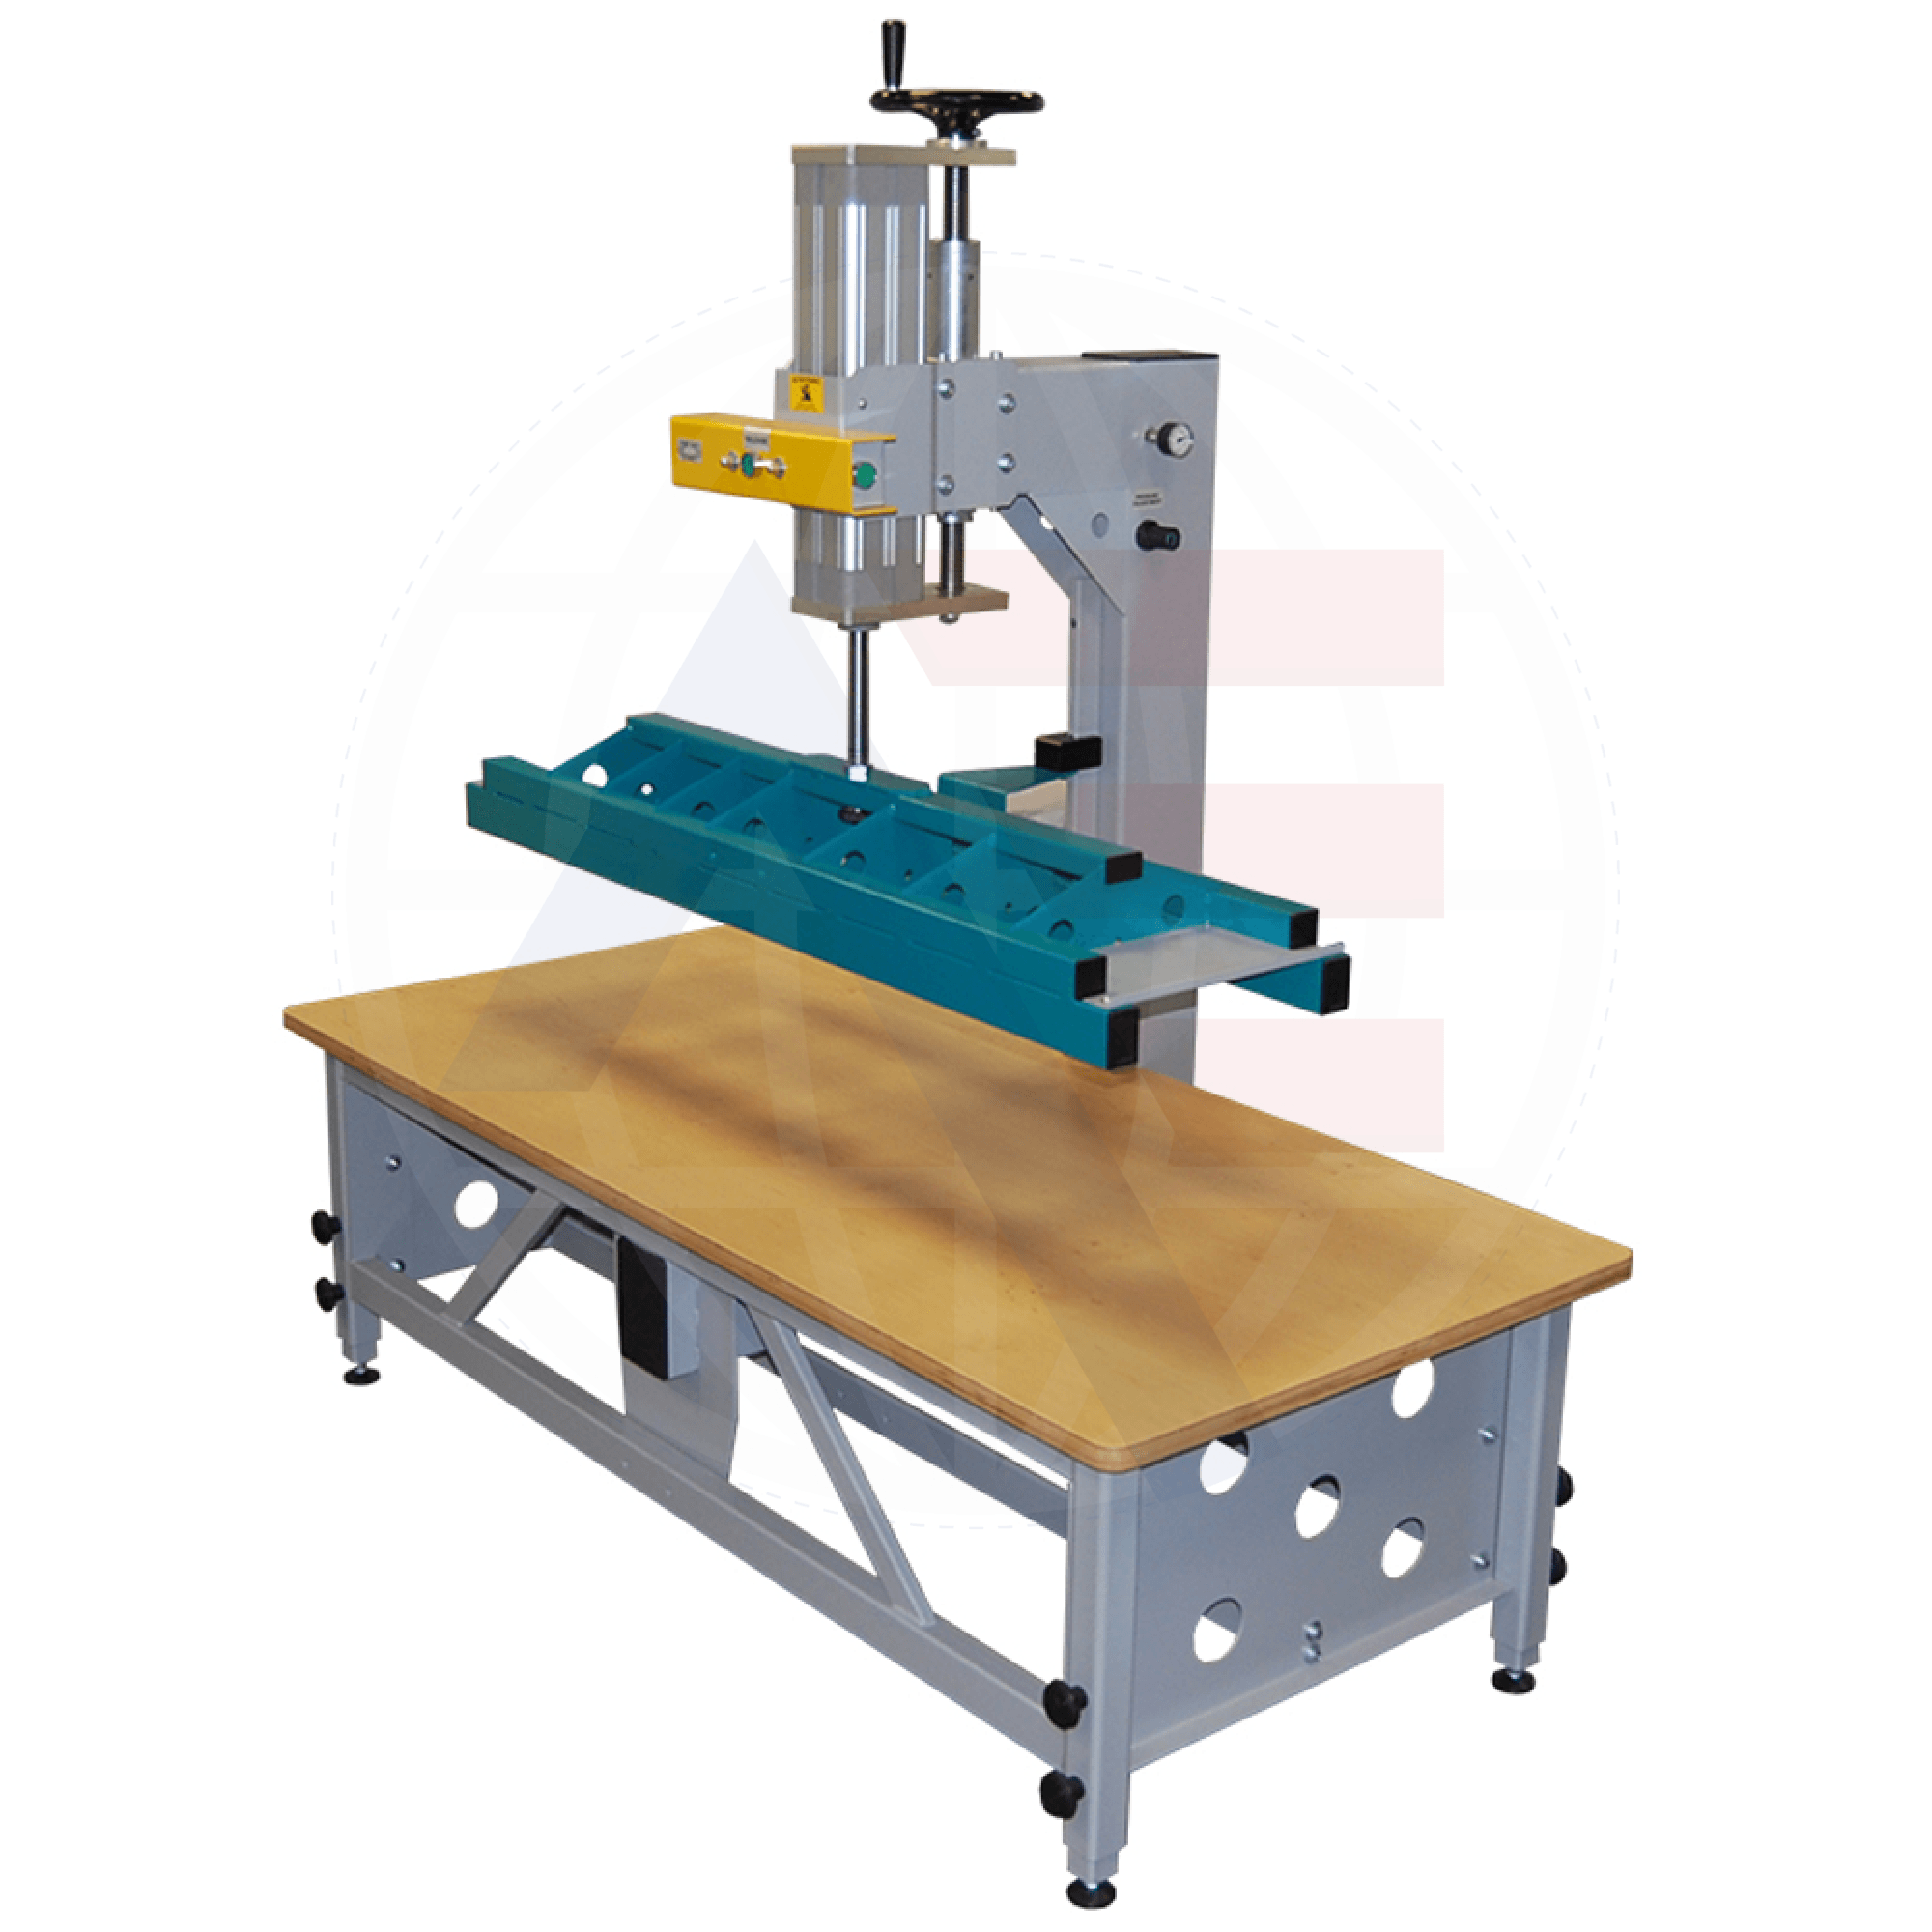 Rexel Pdm-1 Mini Pneumatic Mattress Press